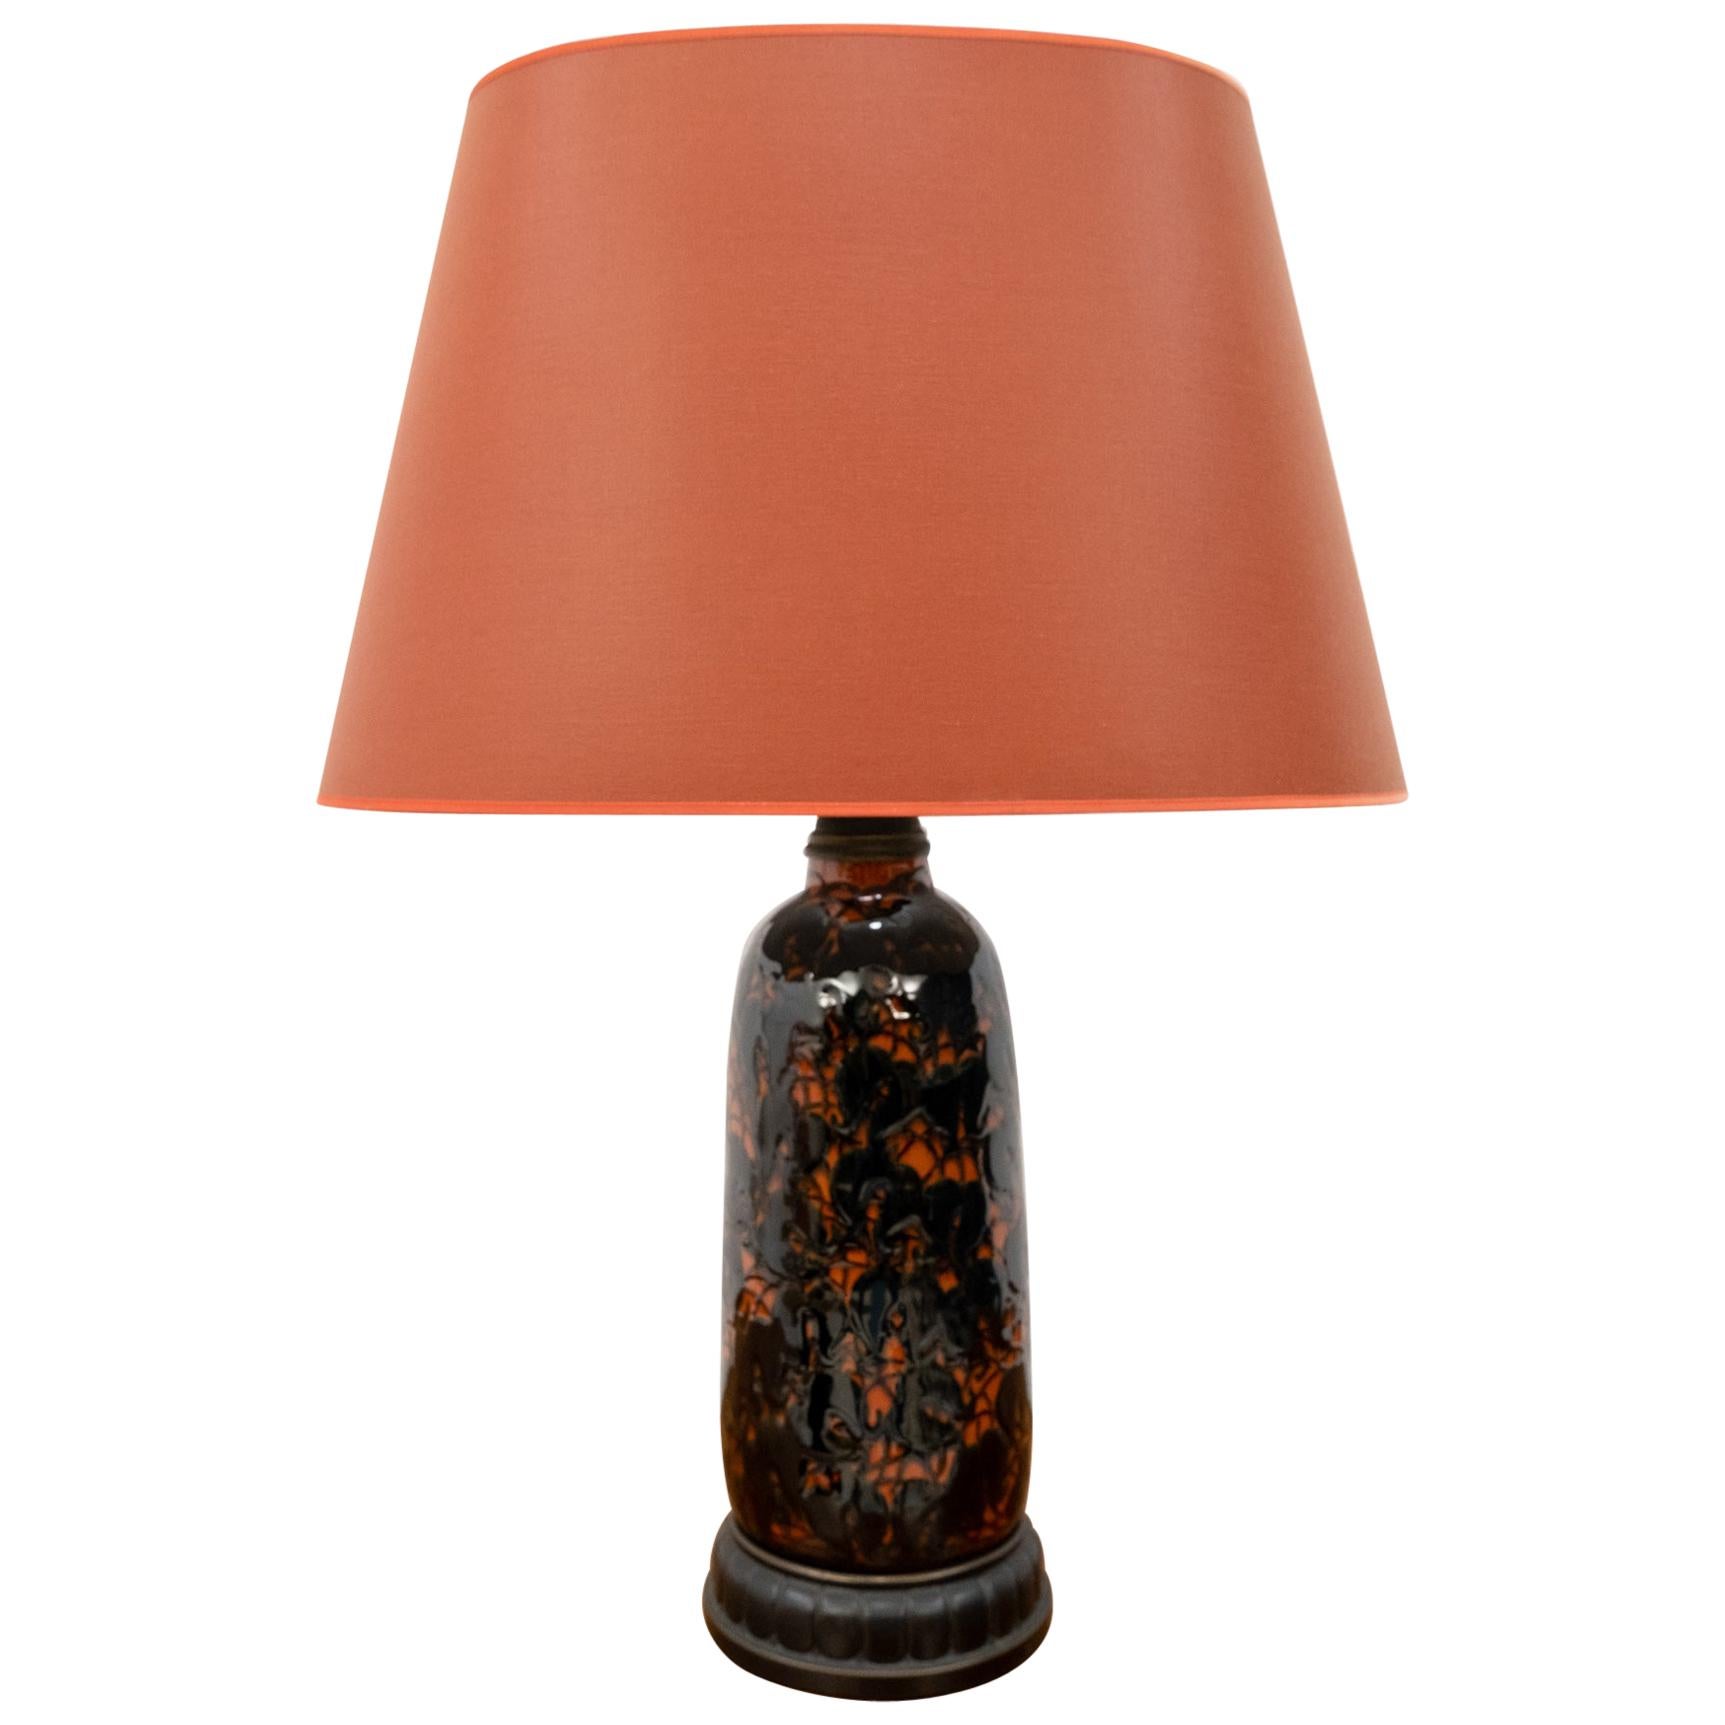 Bitossi Style Art Deco Table Lamp